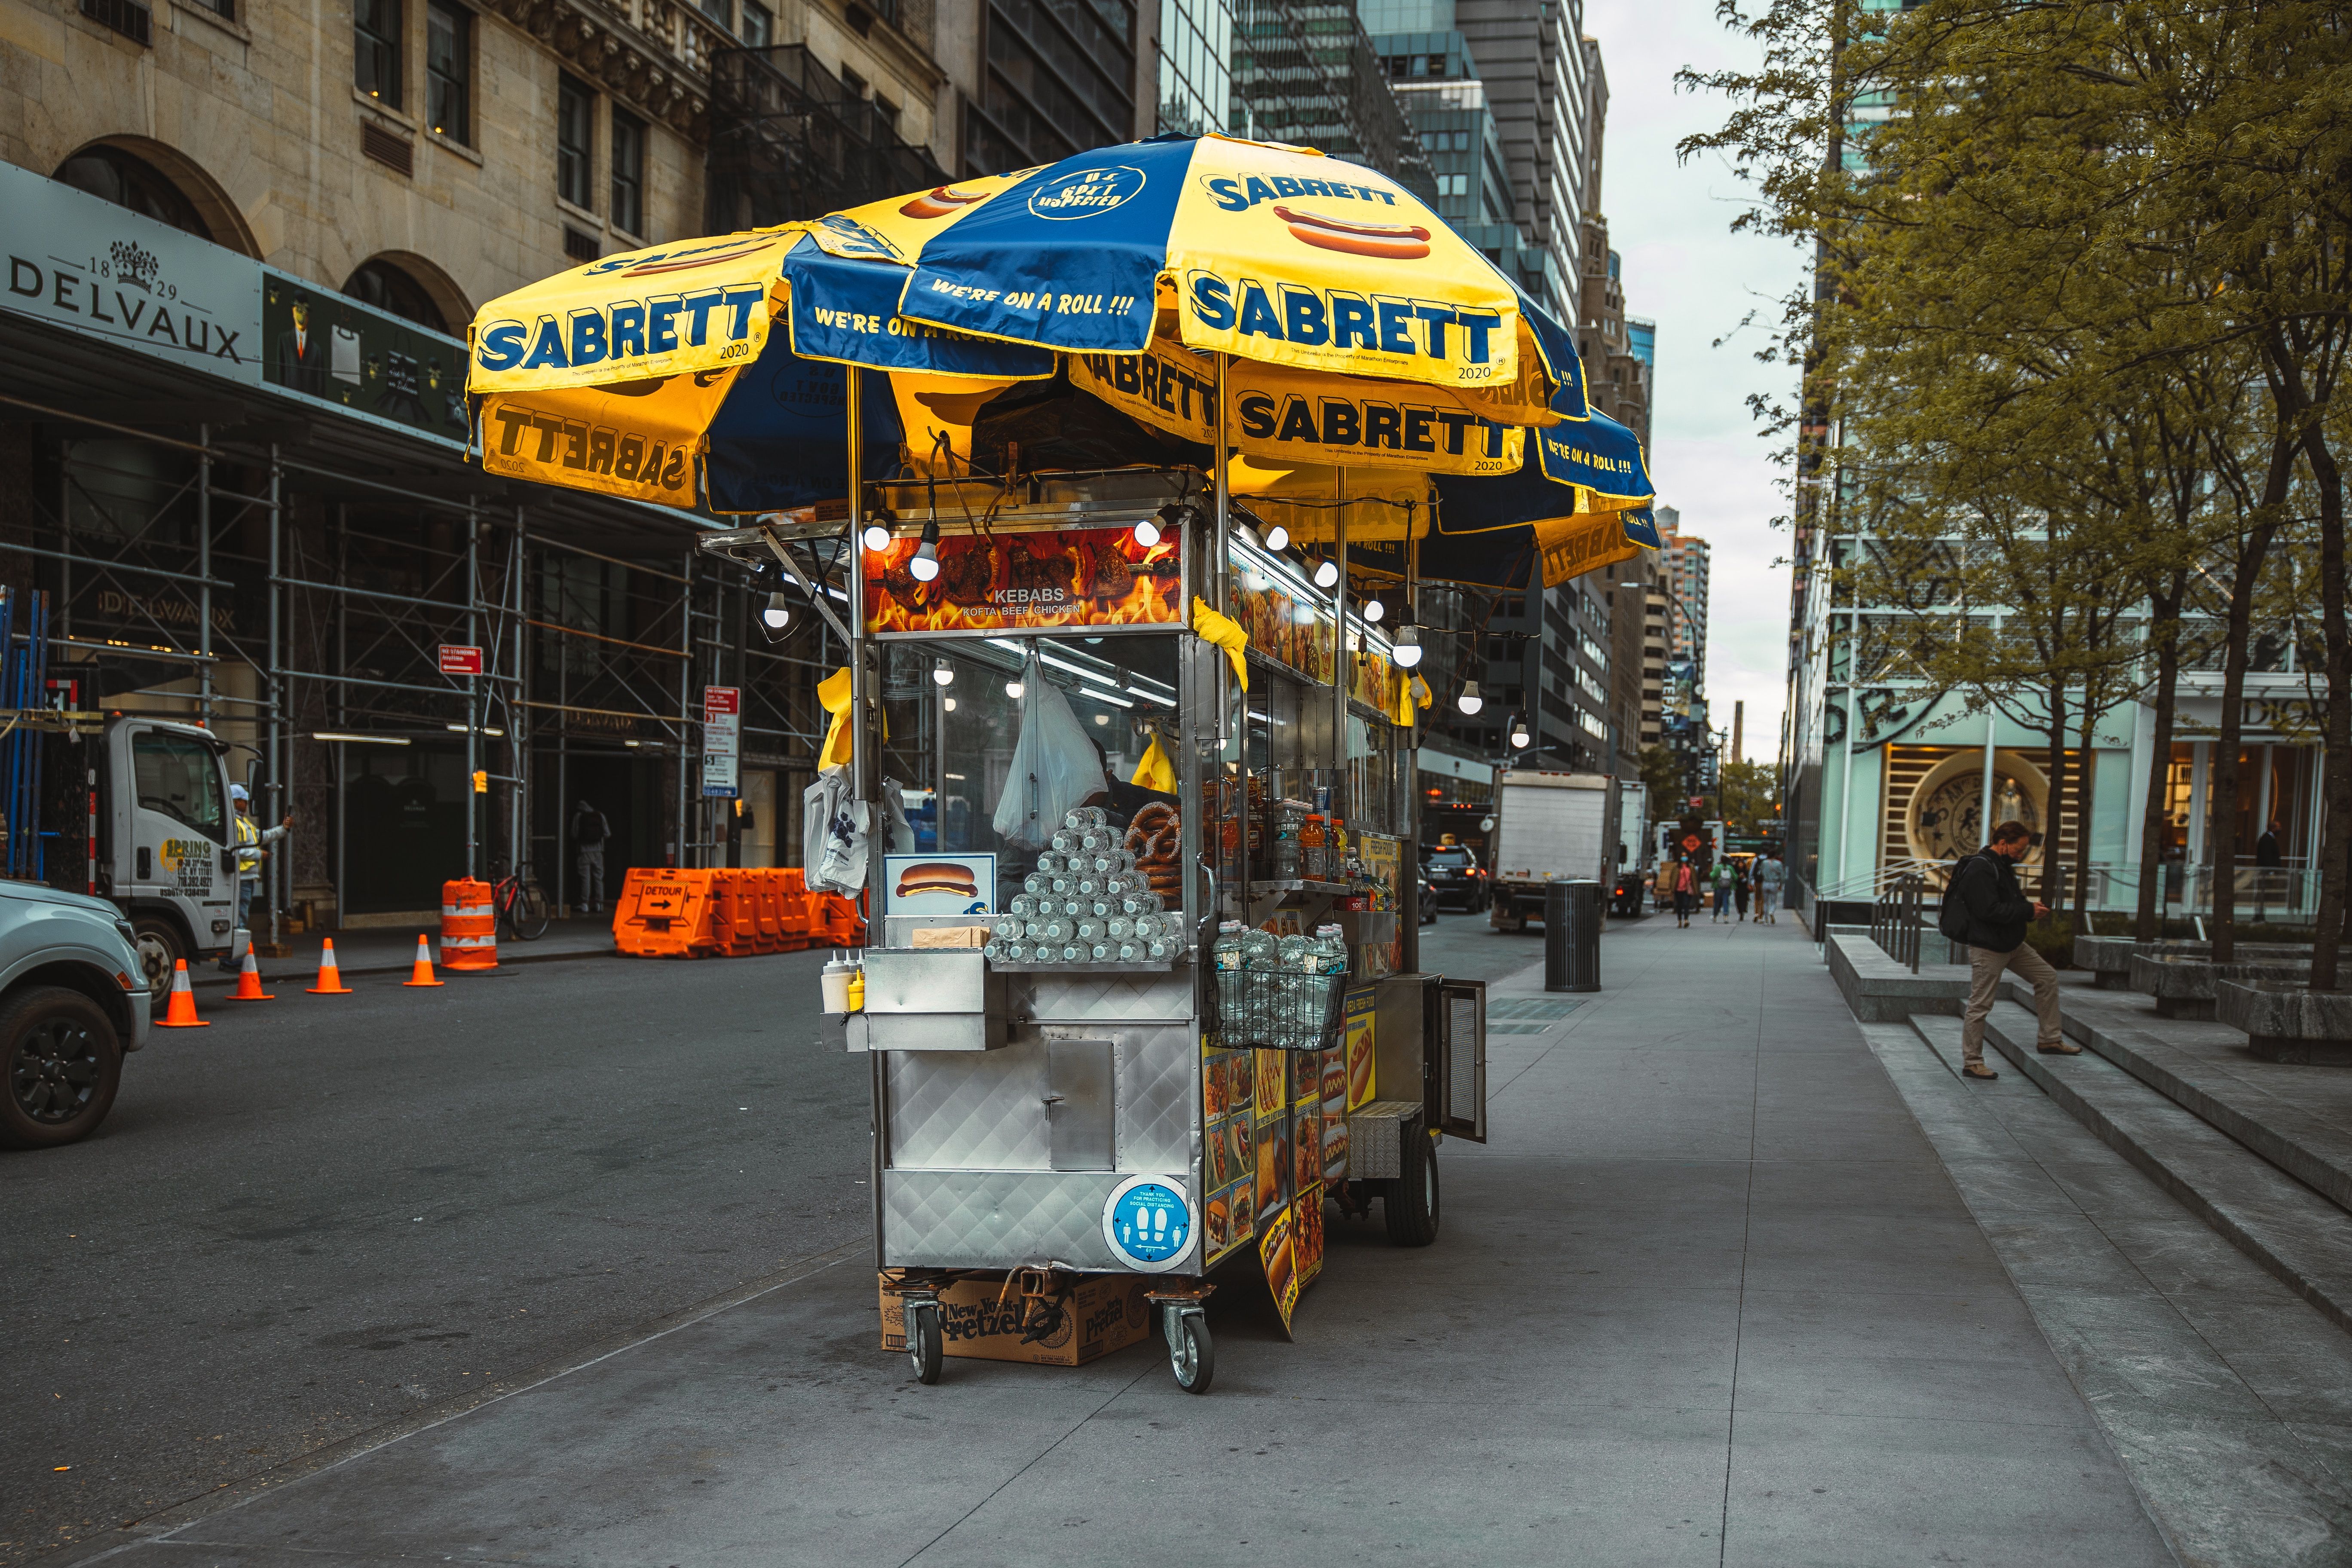 Sabrett Hot Dog Cart on a New York City street on an overcast day